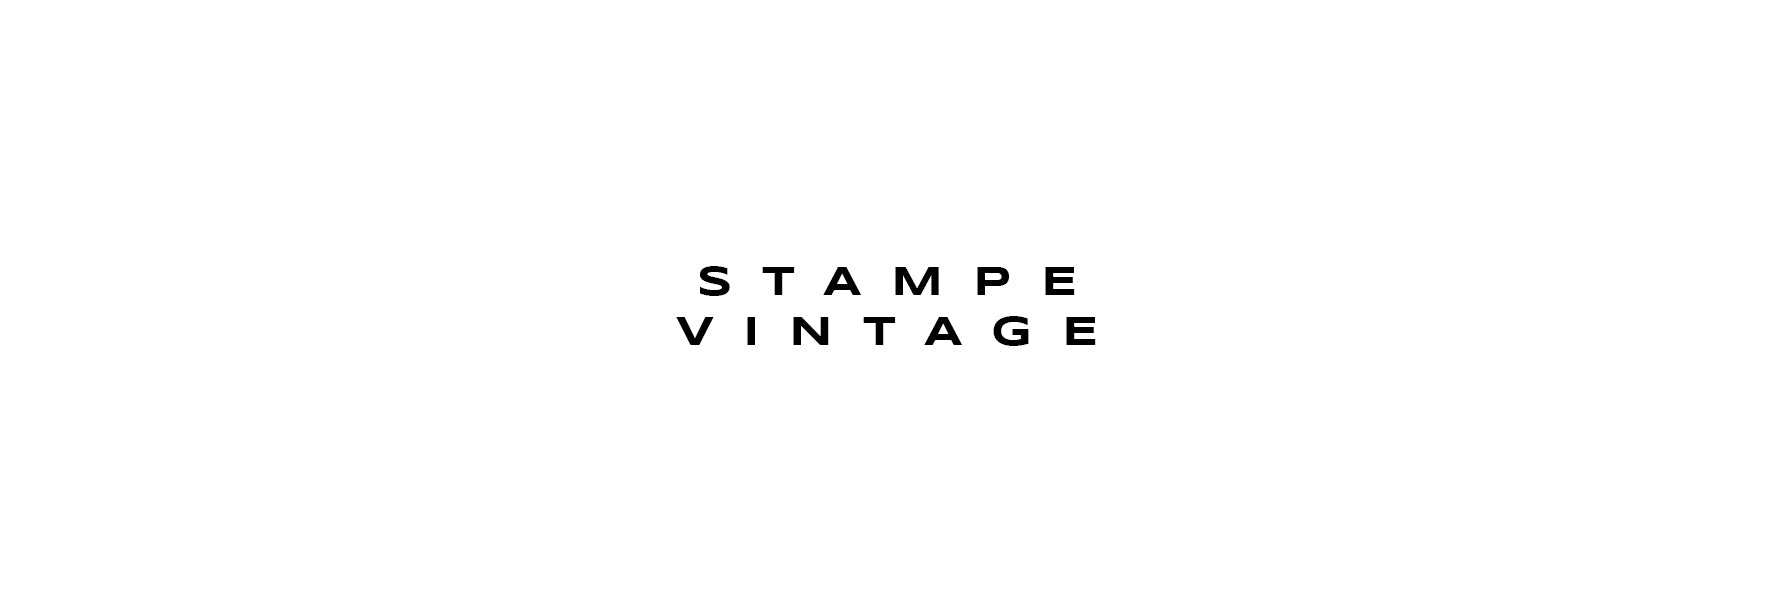 Stampe Vintage – Galleria KapoLab